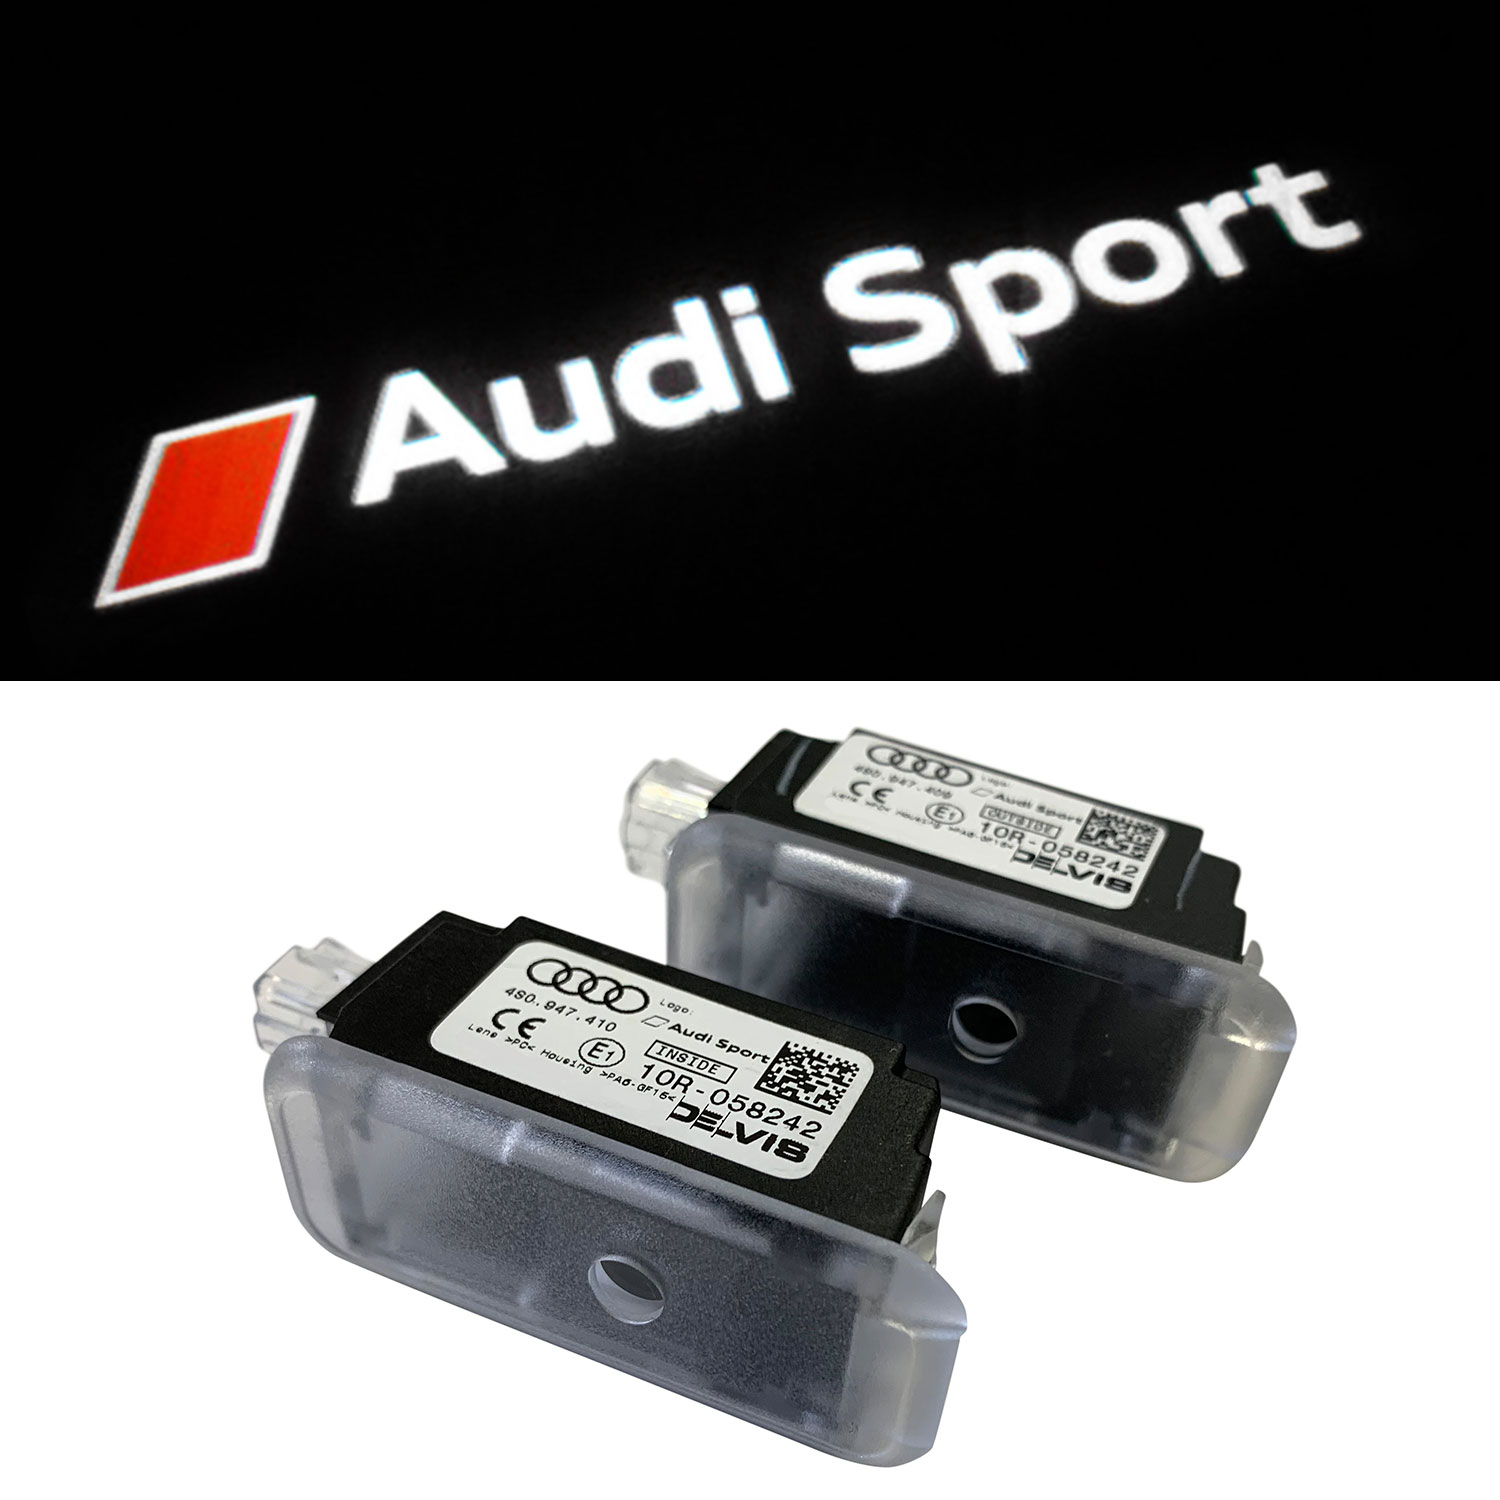 https://bilder.afterbuy.de/images/53074/Audi_Sport_Einstiegsbeleuchtung.jpg